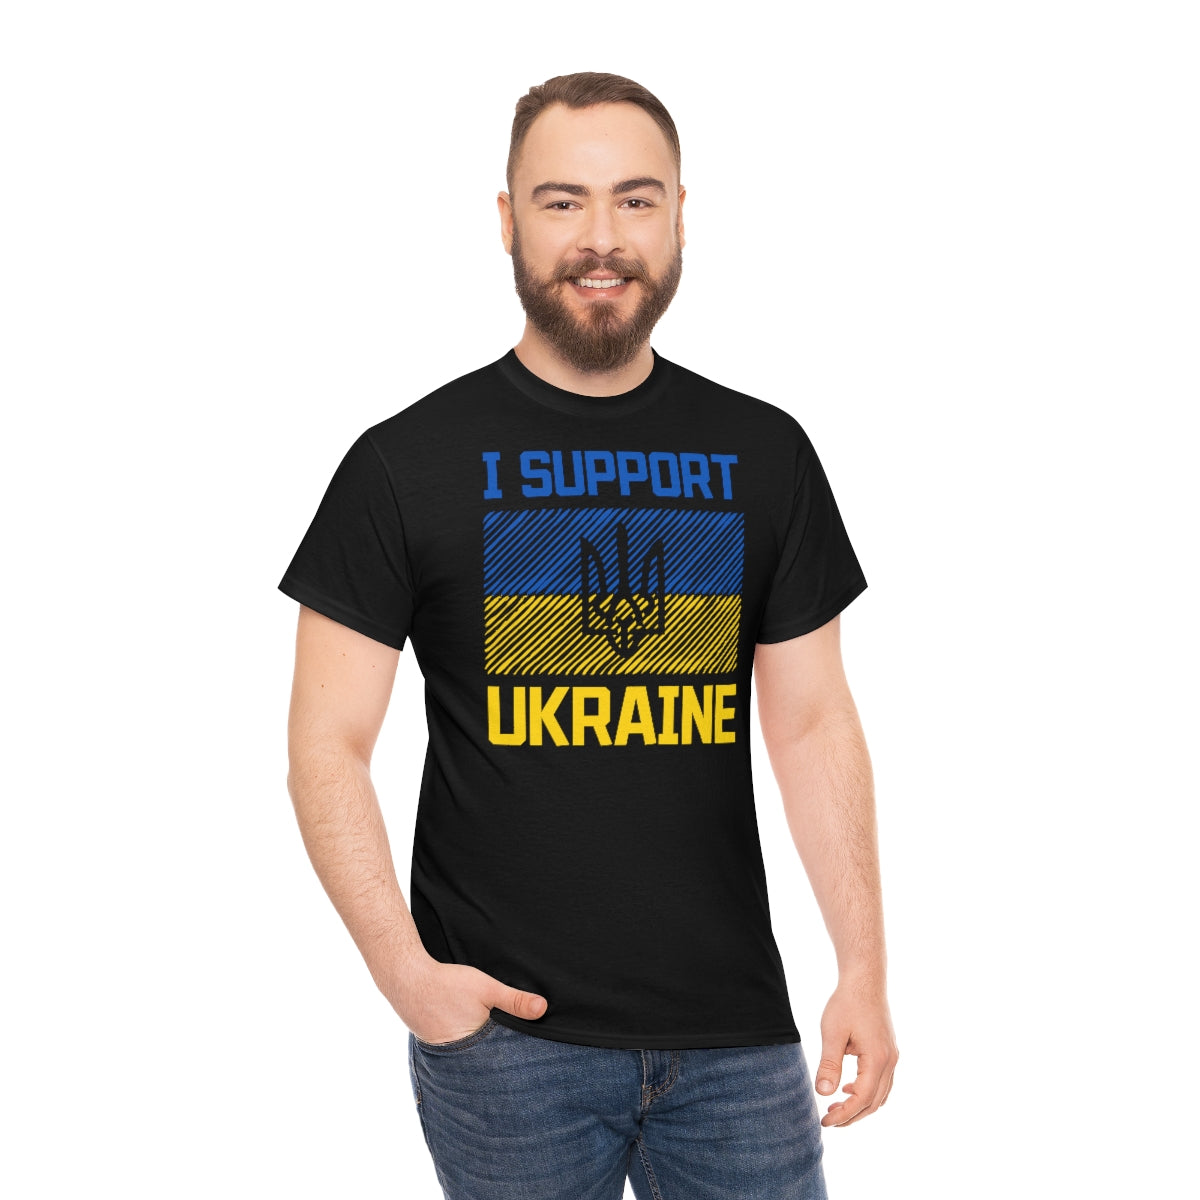 I Am With Ukraine 男女通用棉质 T 恤